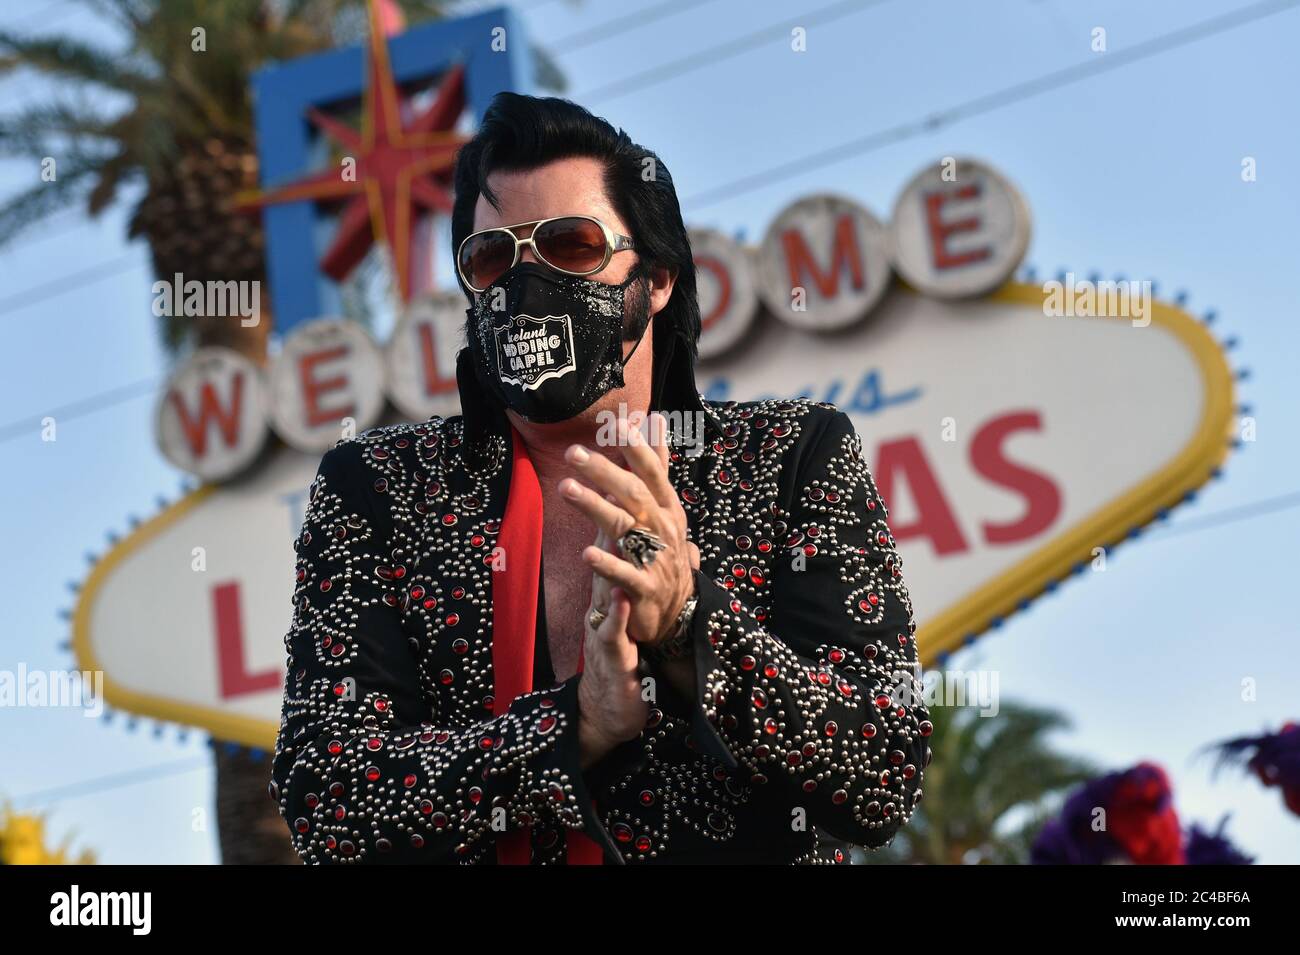 Las Vegas, Nevada, USA. Juni 2020. Elvis Presley-Imitator Brendan Paul  nimmt an einer Modenschau vor dem Welcome to Fabulous Las Vegas-Schild auf  dem Las Vegas Strip Teil, um die Pro-Maskentragekampagne 'Mask up